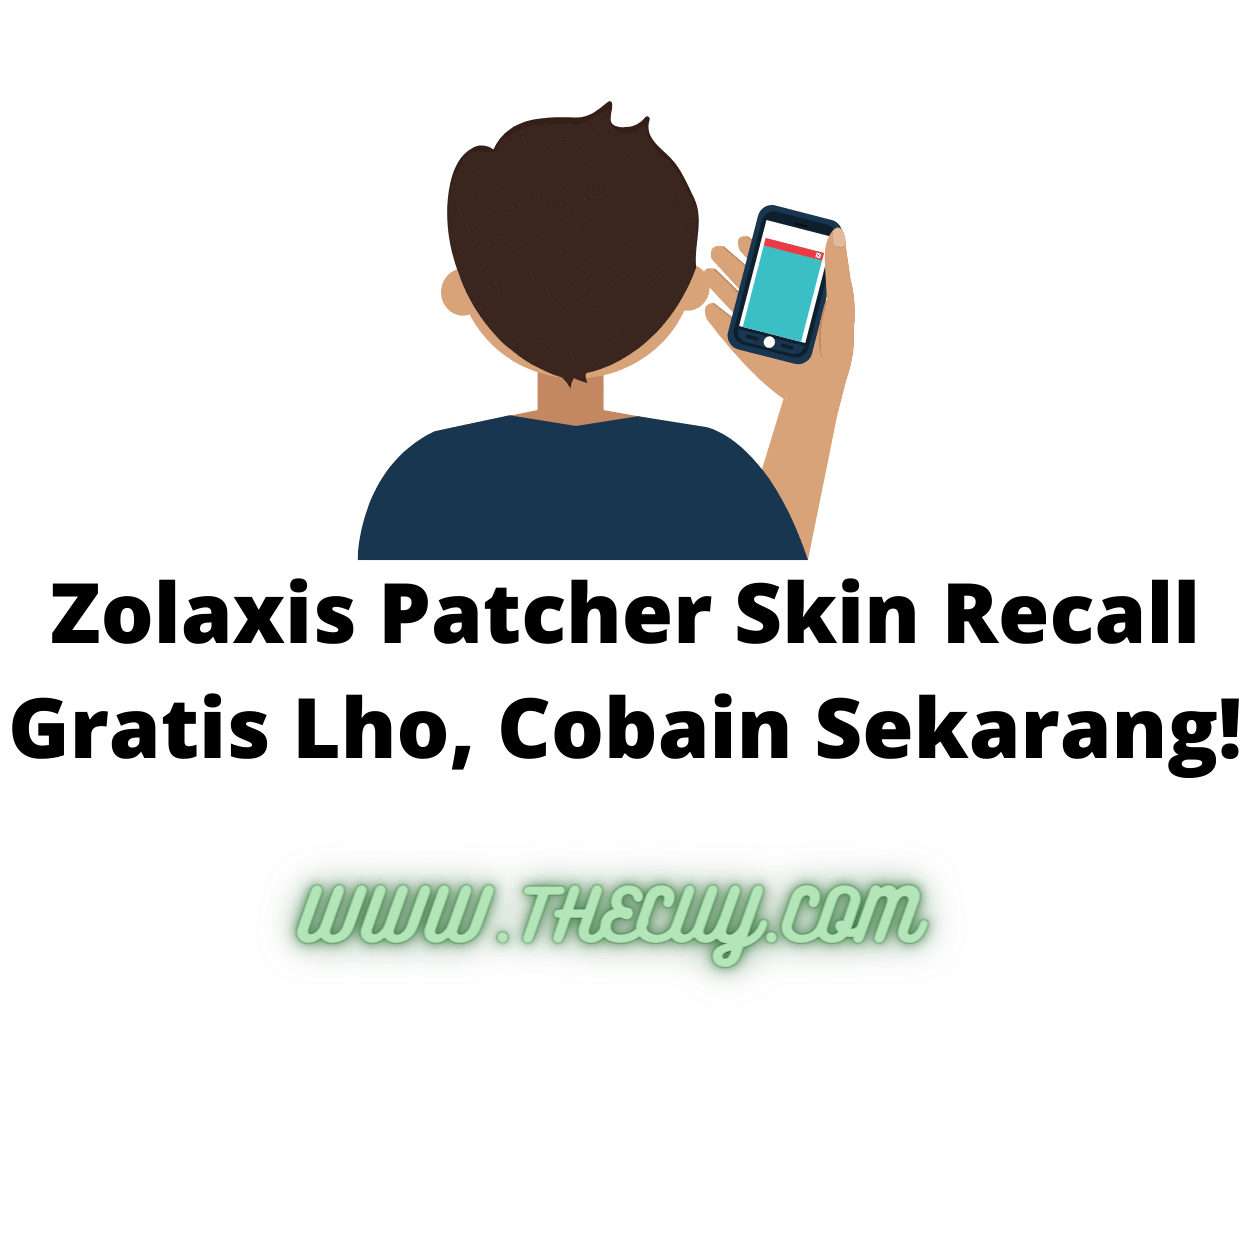 Zolaxis Patcher Skin Recall Gratis Lho, Cobain Sekarang!